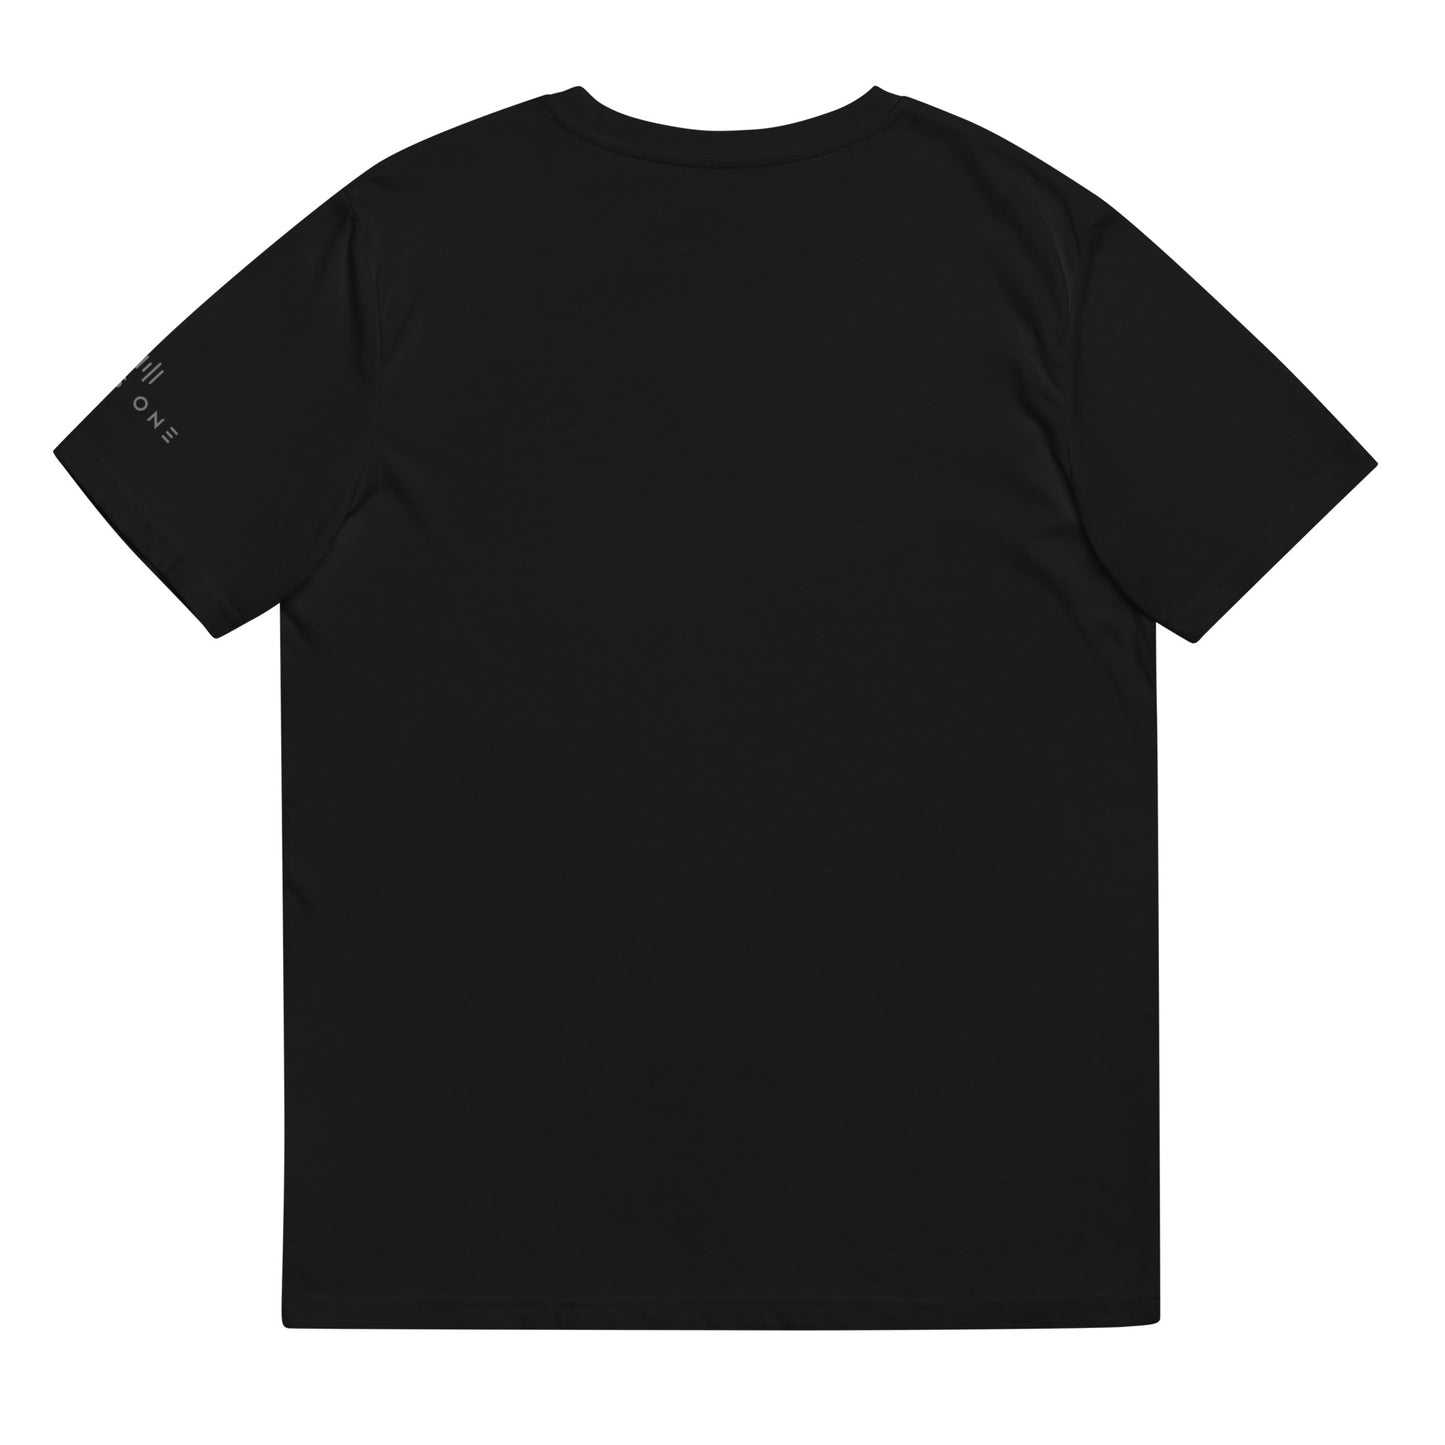 SK8 Kid (v1) Unisex organic cotton t-shirt